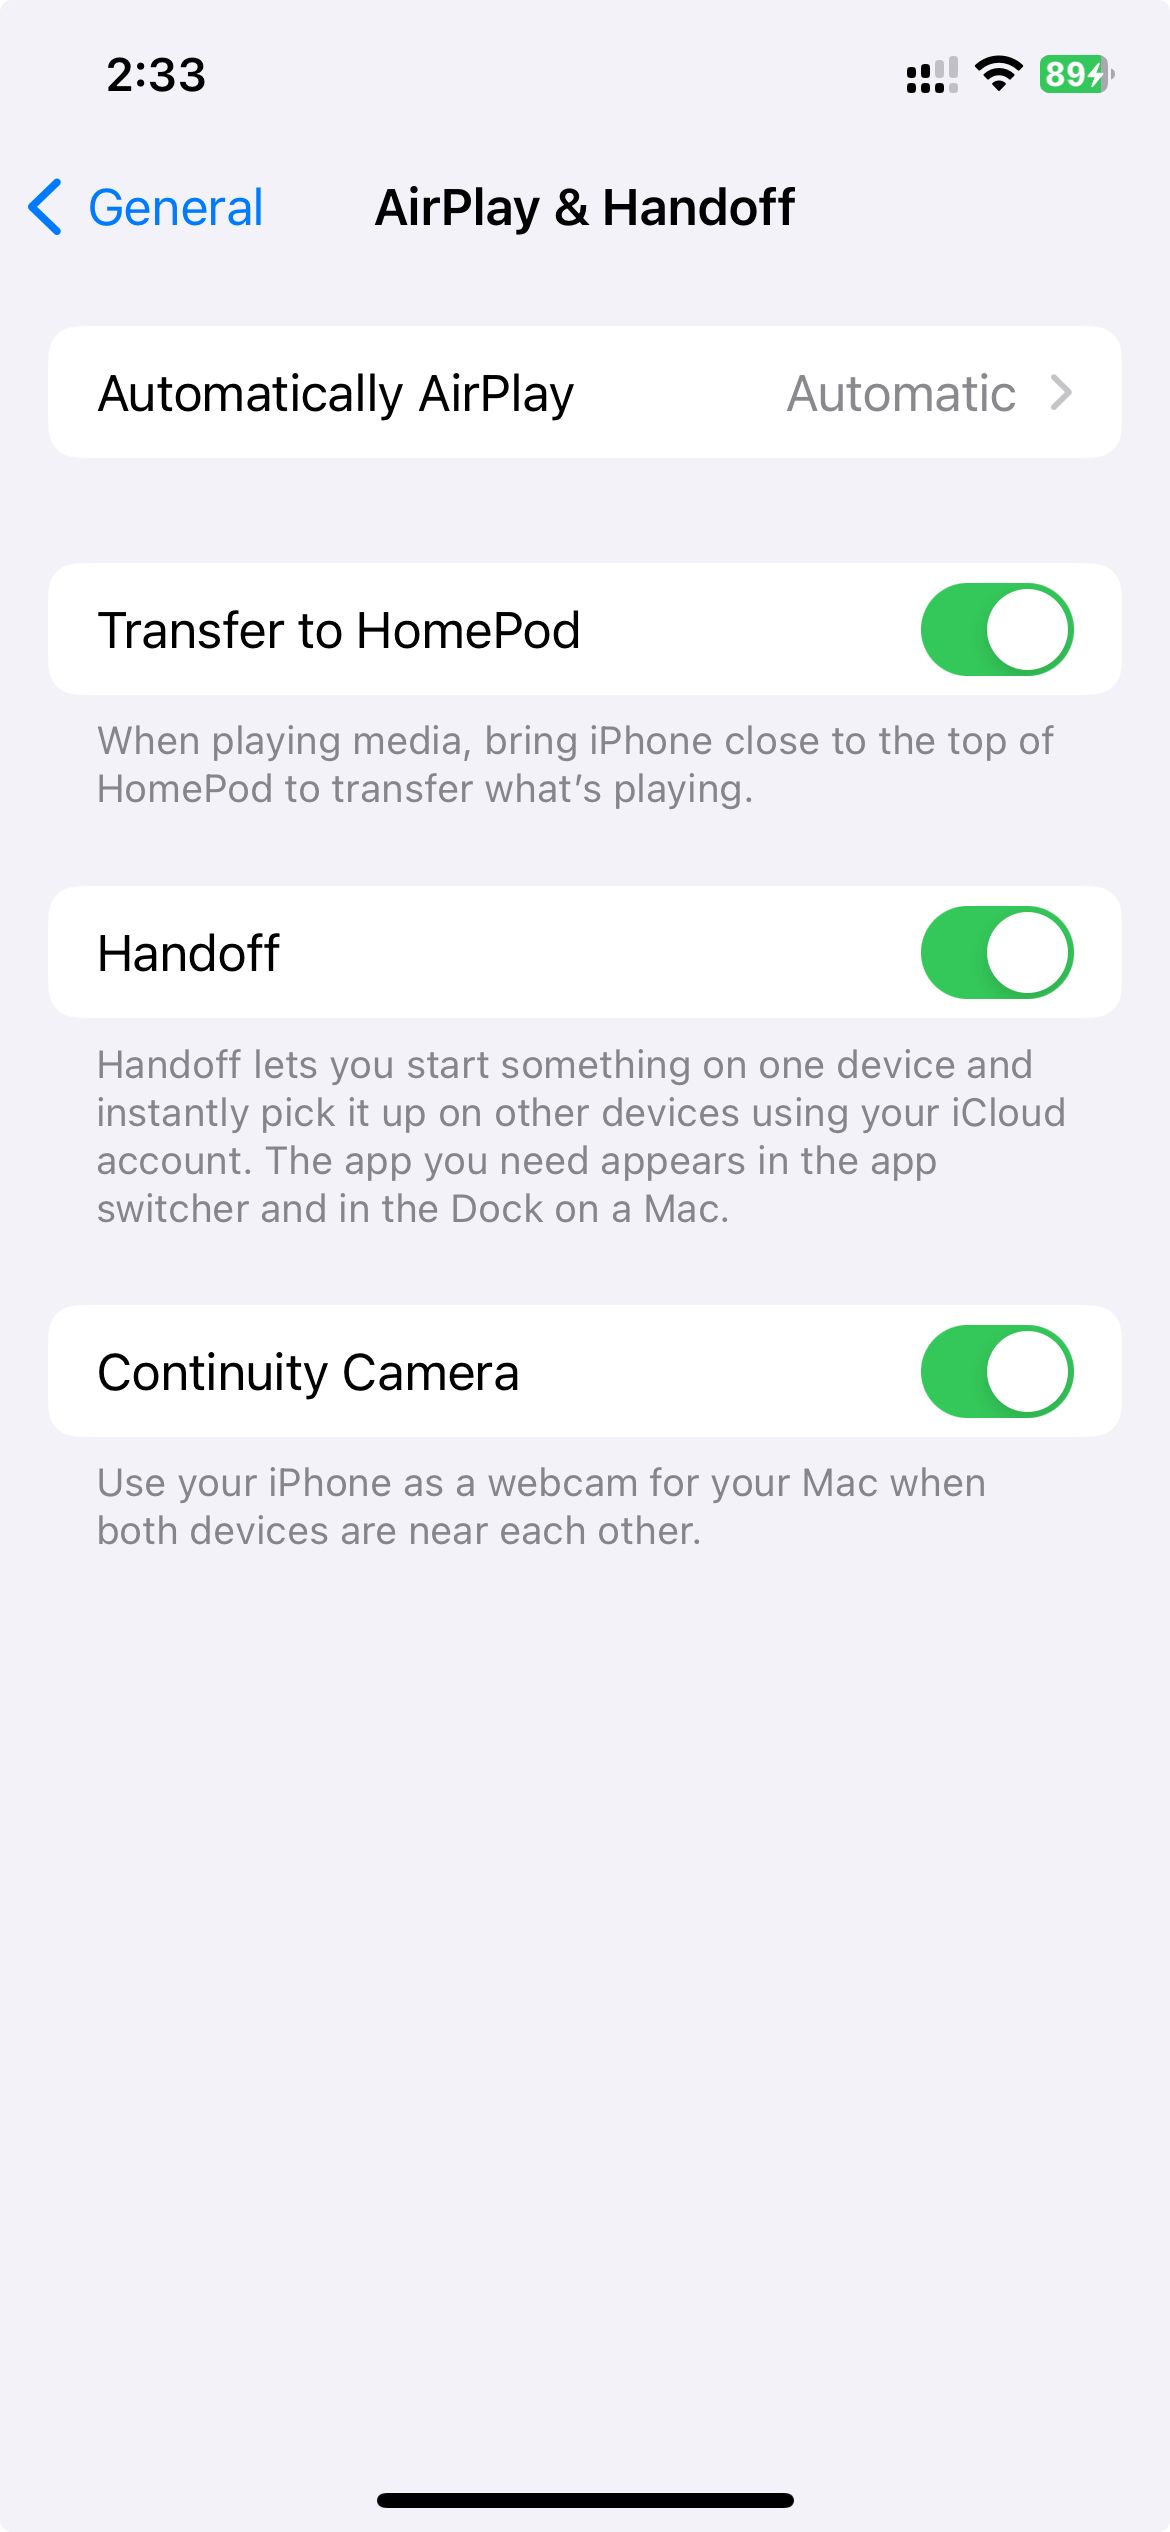 AirPlay & Handoff options under General settings in iOS